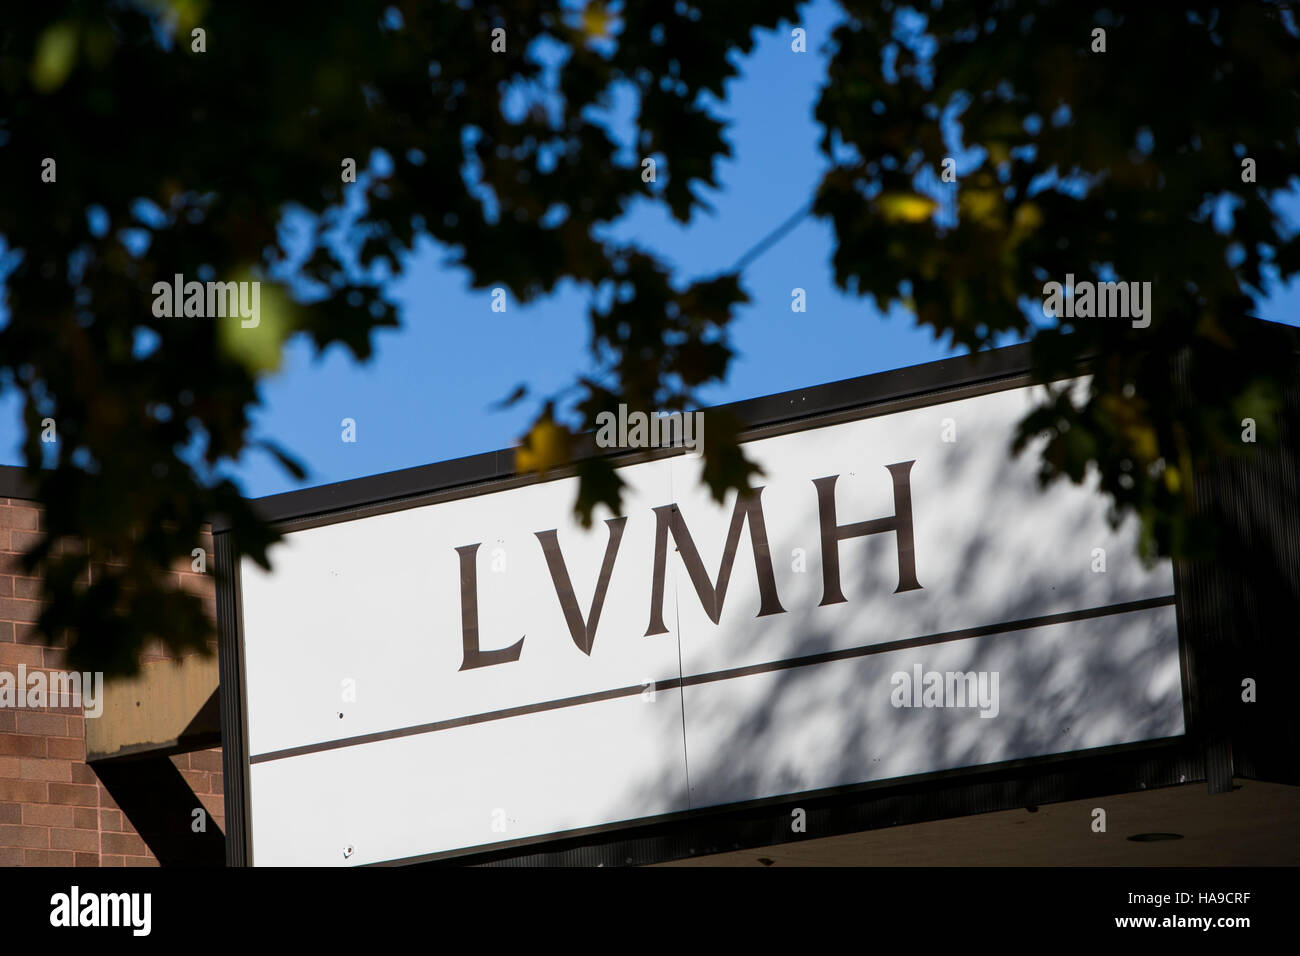 Lvmh Stockfotos & Lvmh Bilder - Alamy